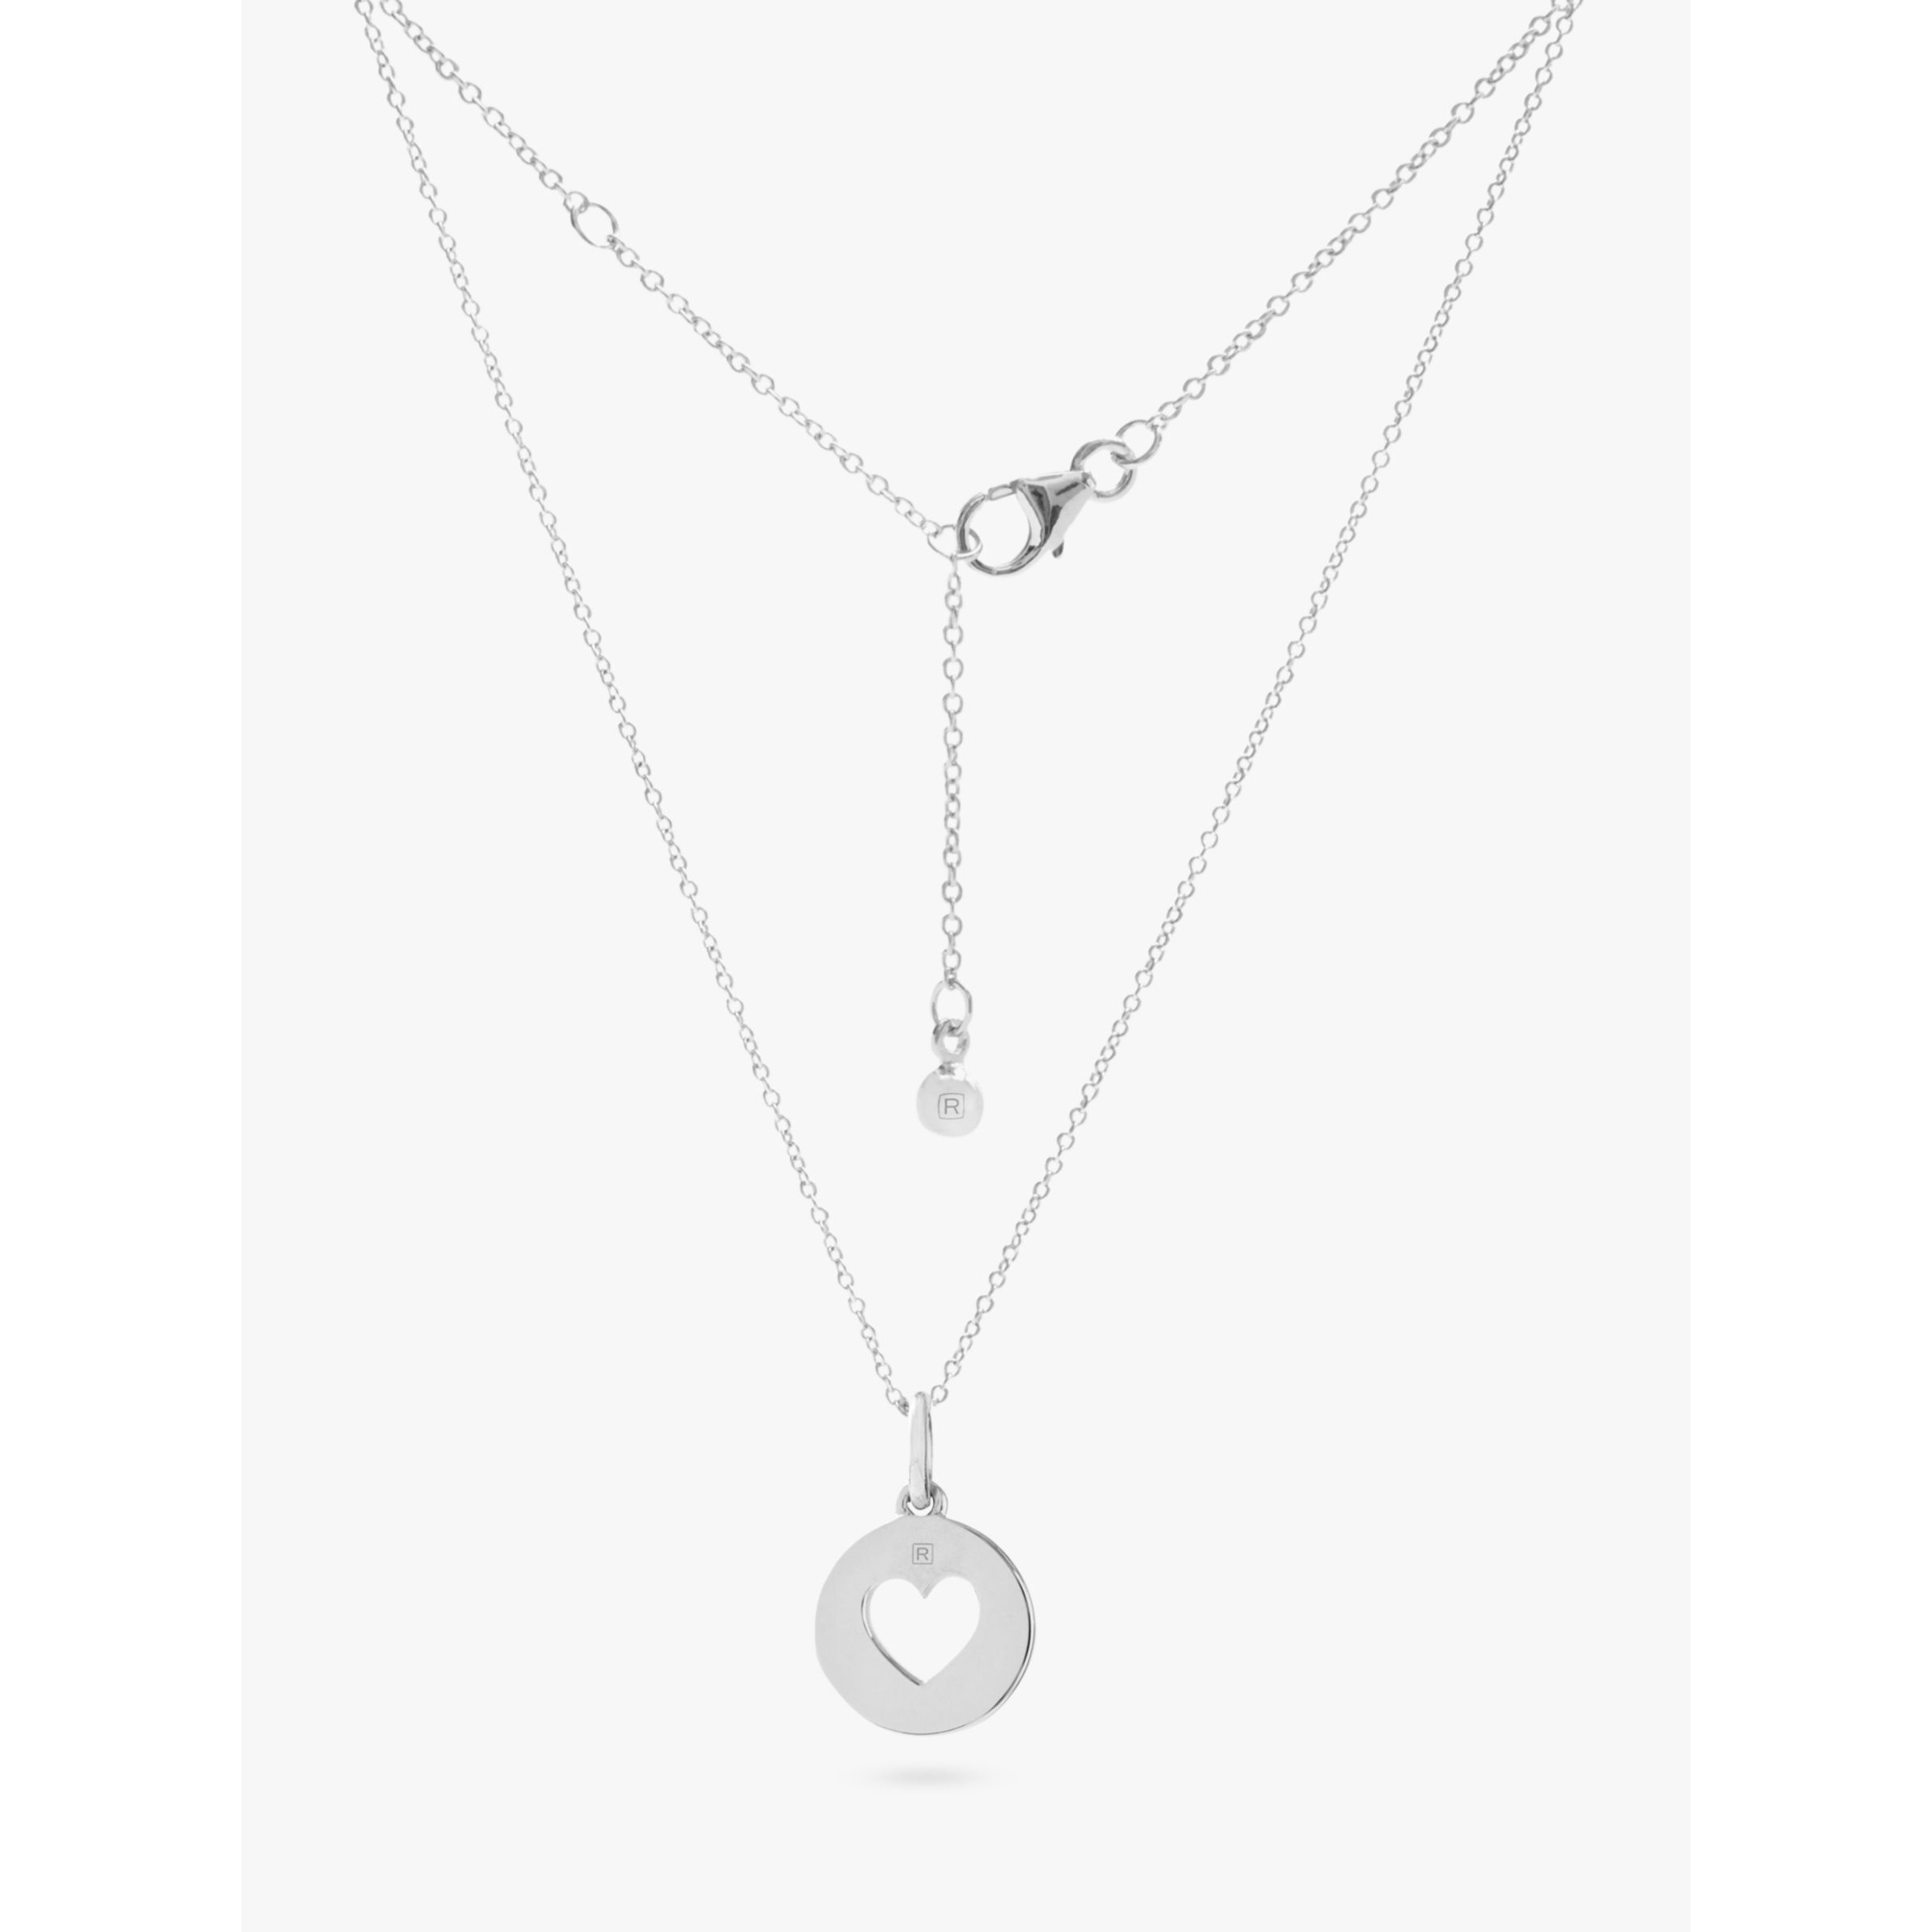 John Lewis Rope Chain Necklace, Silver | £10.00 | Buchanan Galleries